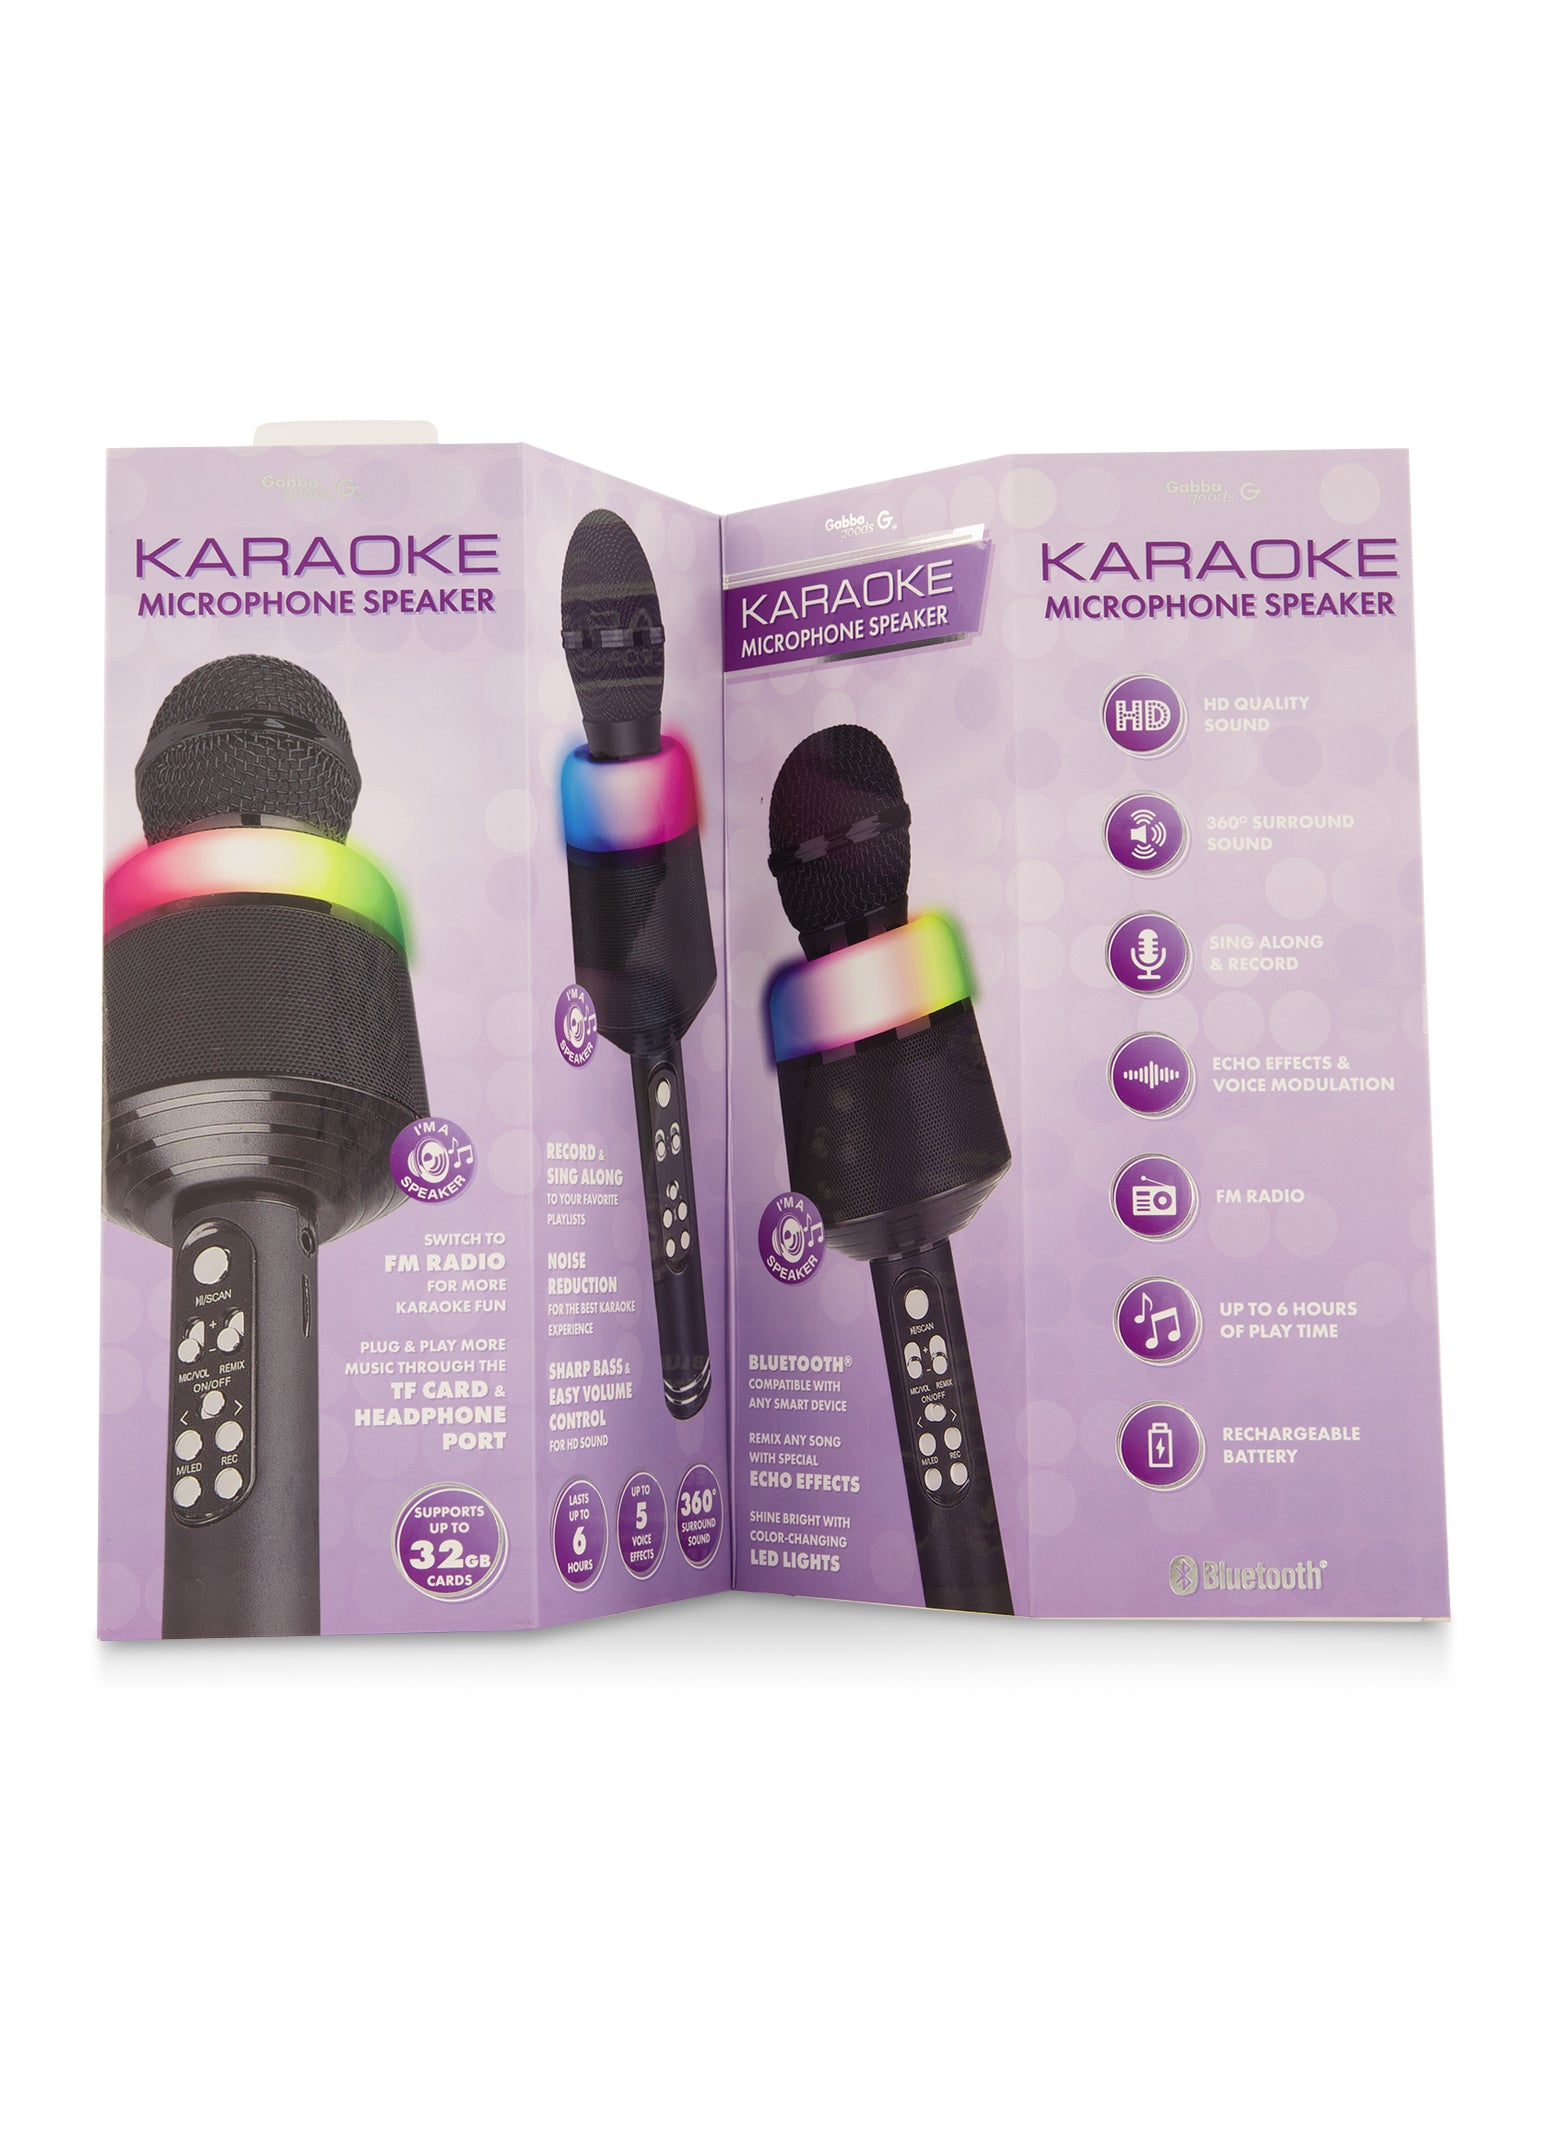 LED Light Up Karaoke Microphone with FM Radio Wireless Speaker - Black